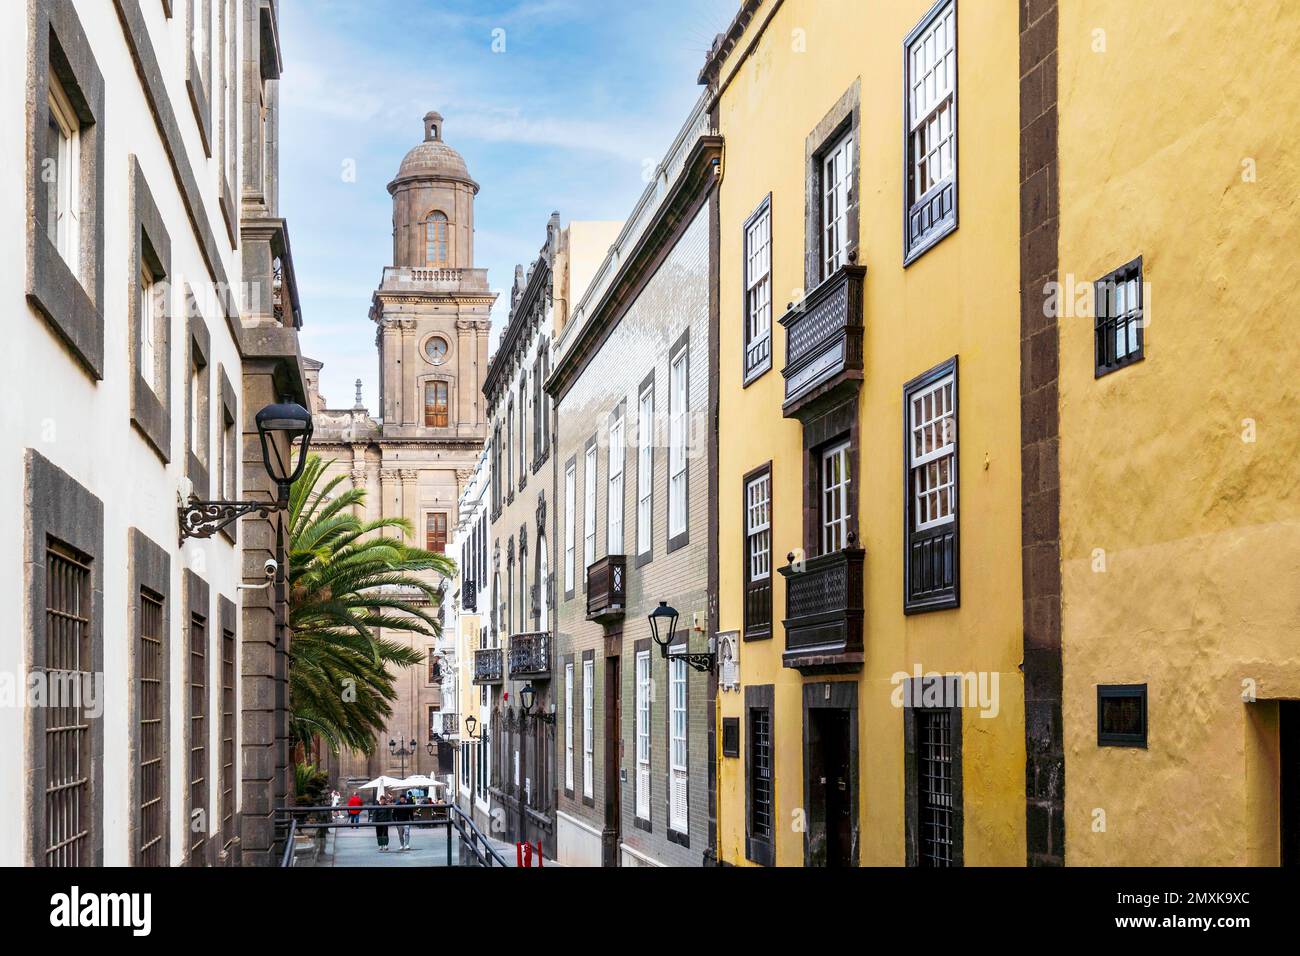 Calle histórica que conduce a la Catedral y Plaza de Santa Ana, Vegueta, Las Palmas de Gran Canaria, España, Europa Foto de stock